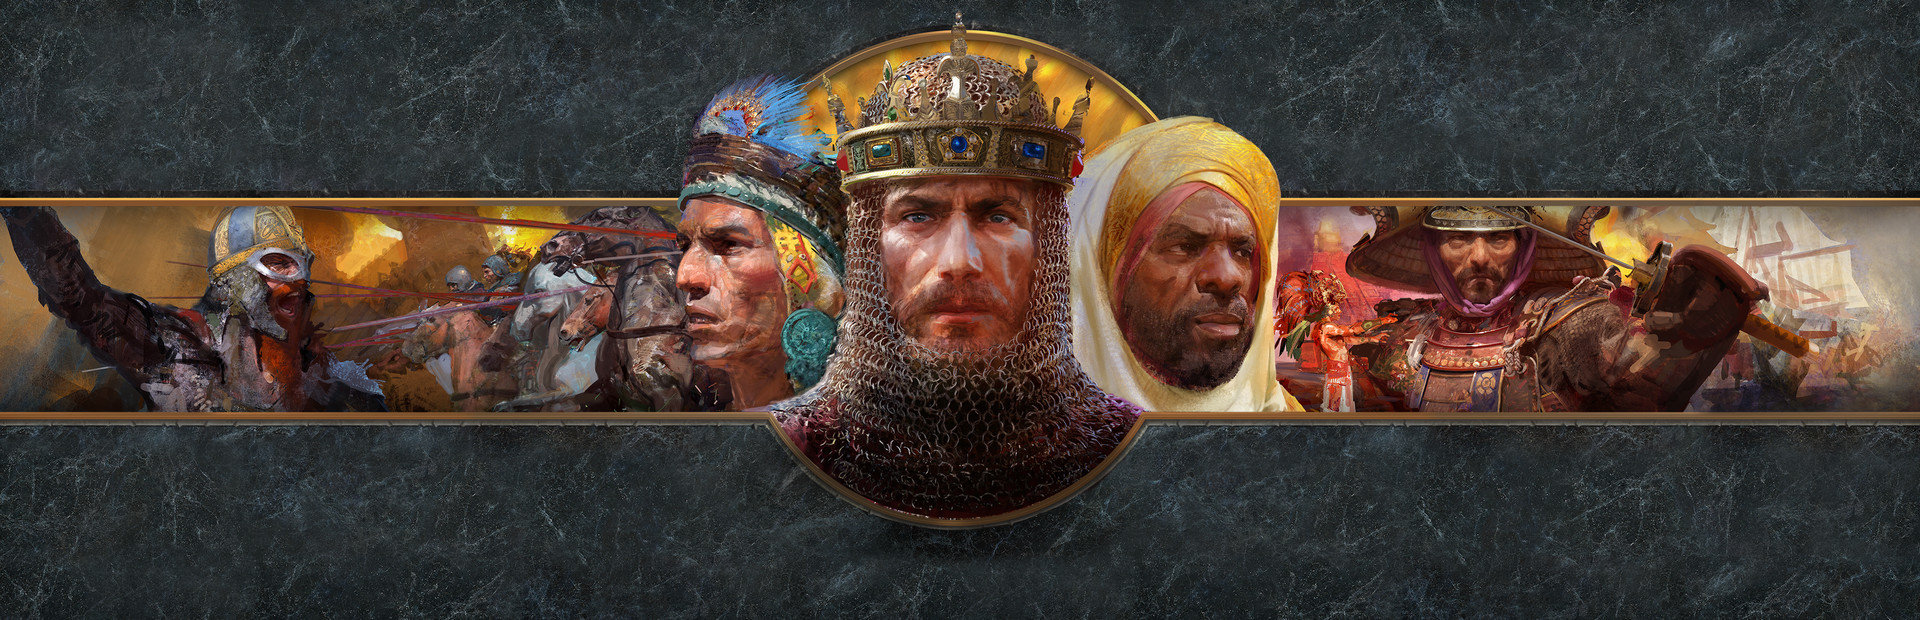 Империя первый шаг полностью. Age of Empires II Definitive Edition: the last Khans. Europa Universalis 4. Europa Universalis 4 фон.